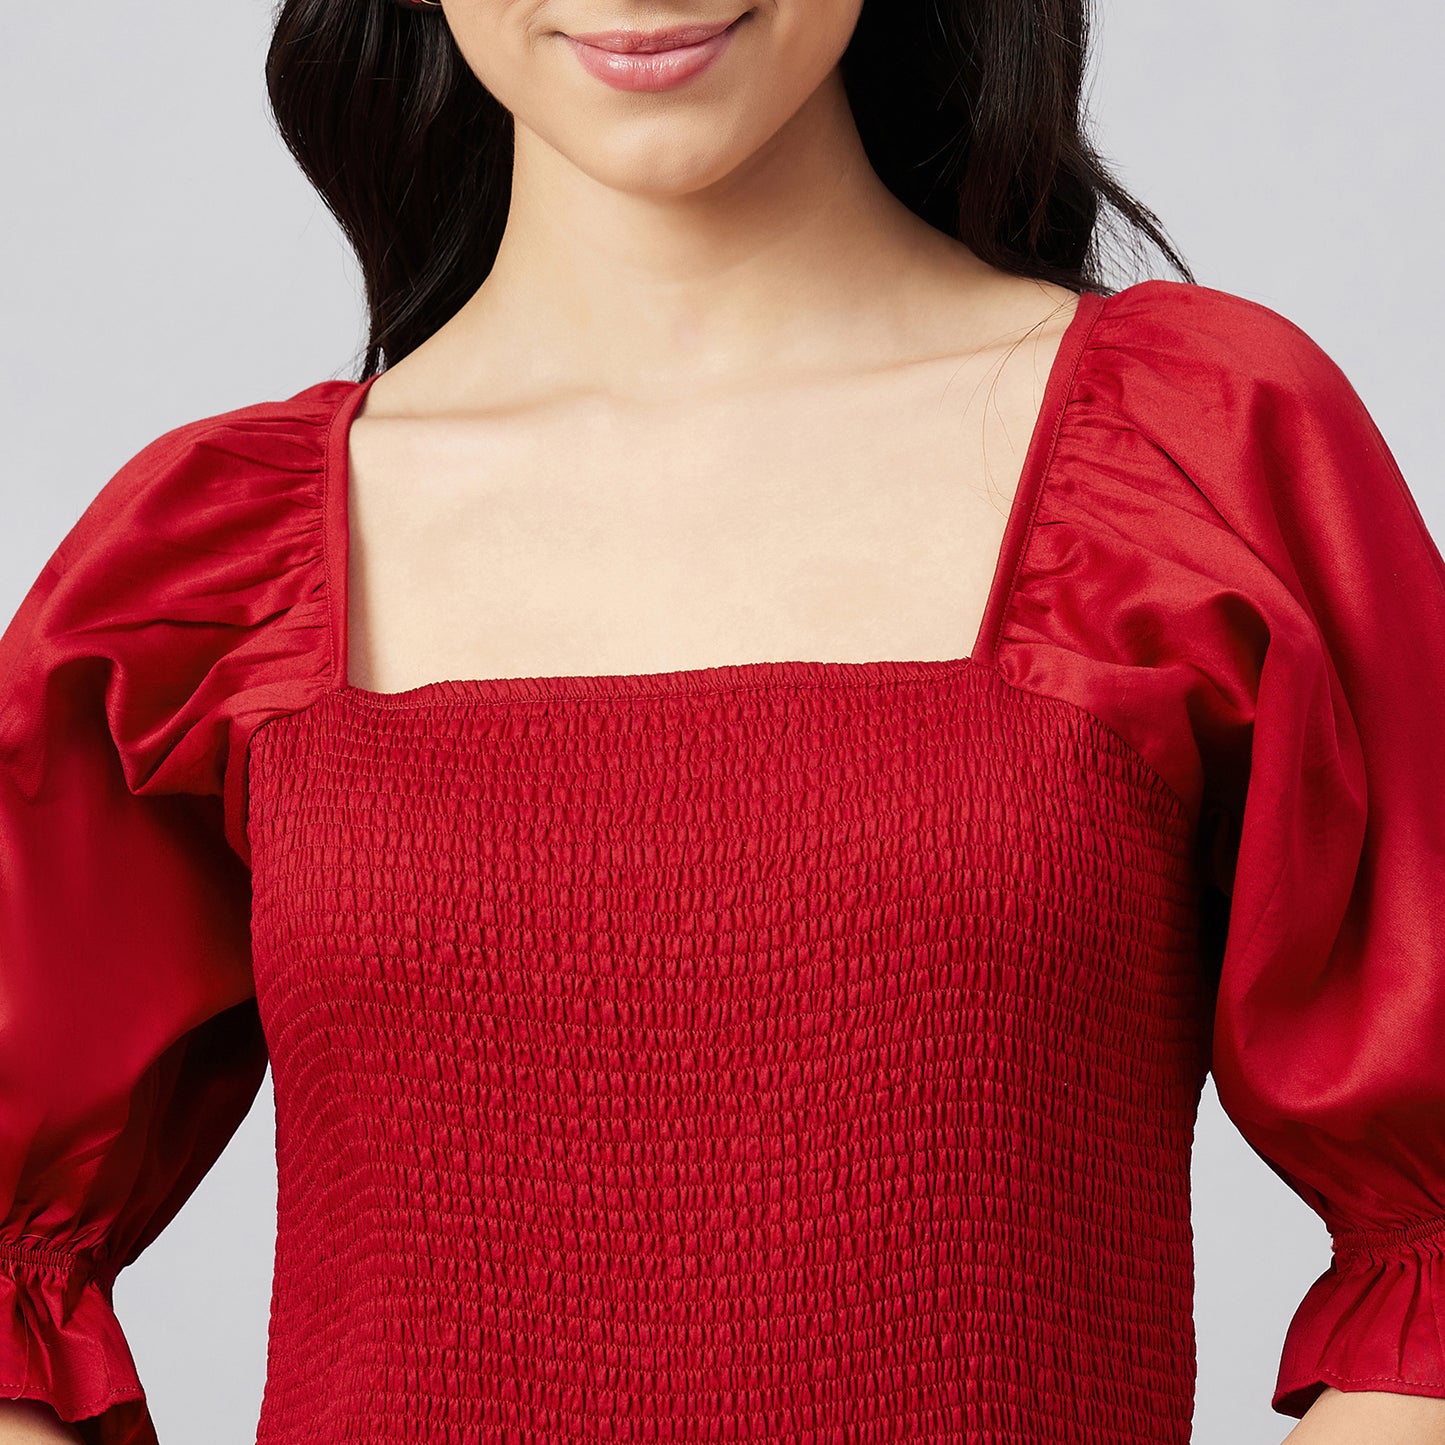 Red Smocked Maxi Dress